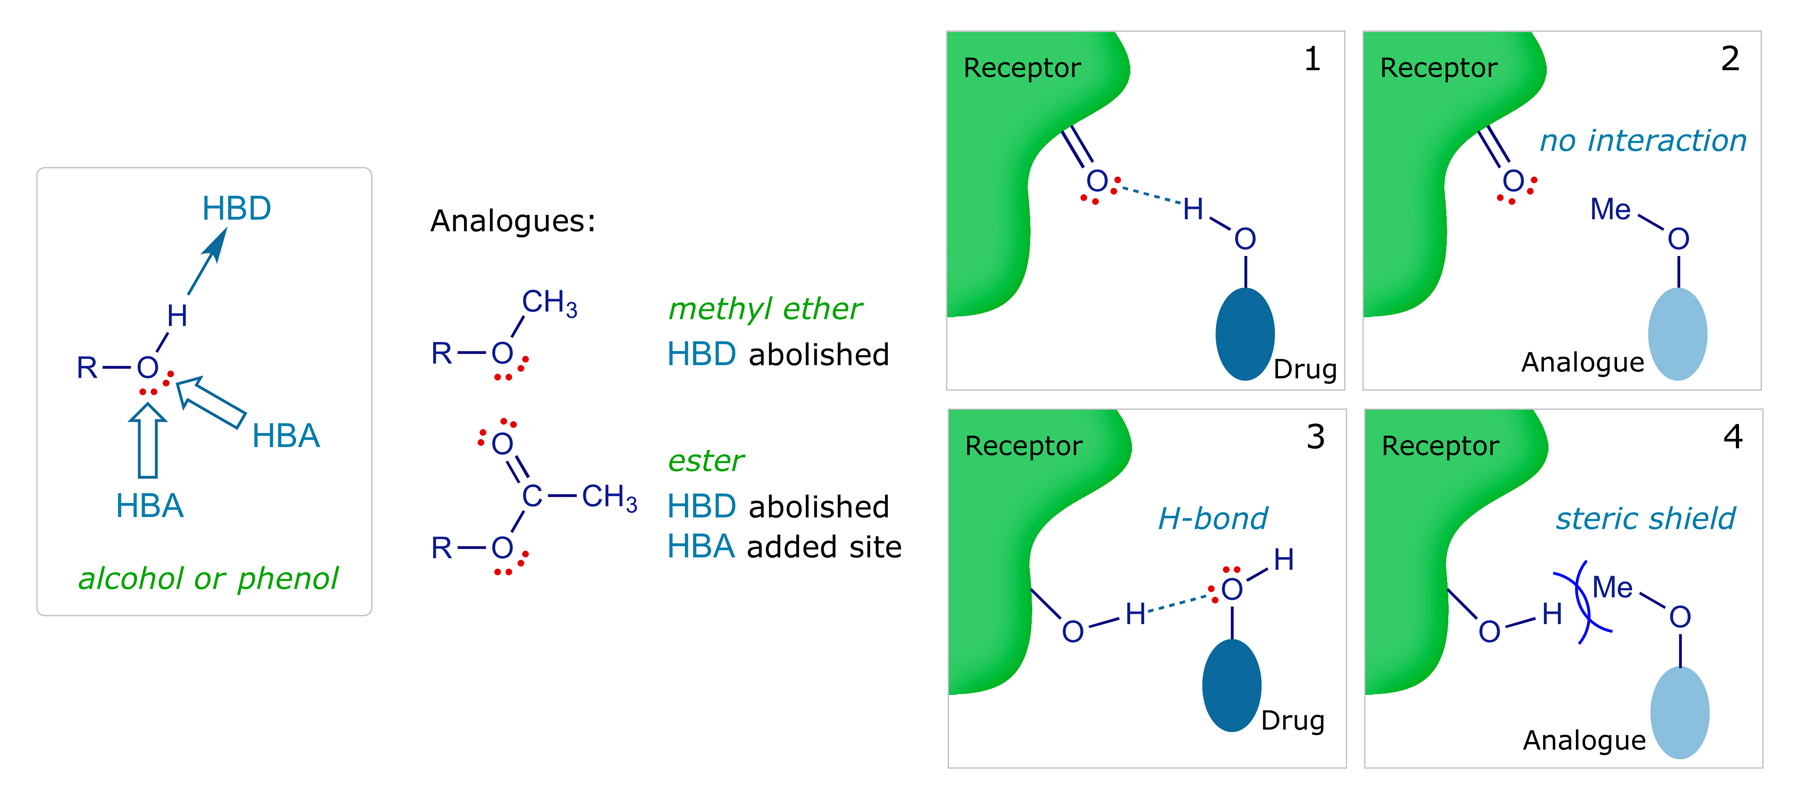 Binding motifs of functional groups: Alcohol/phenol hydroxyl